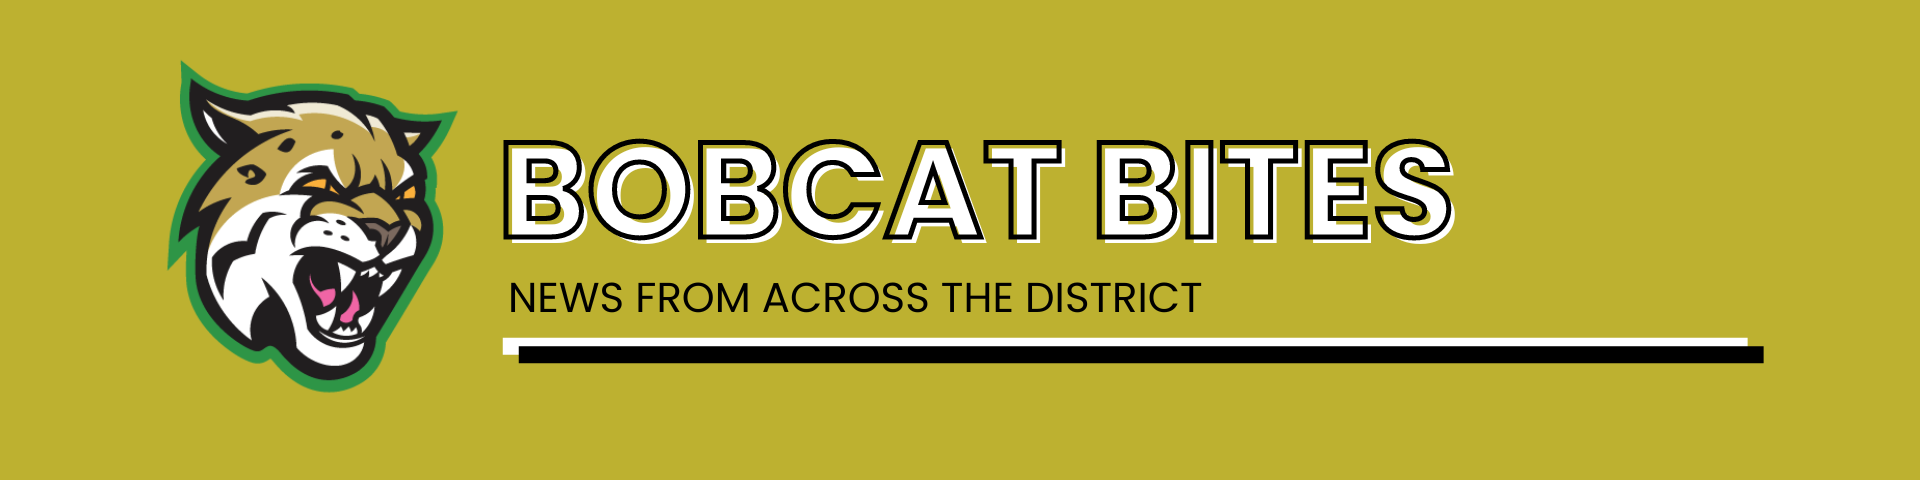 bobcat bites